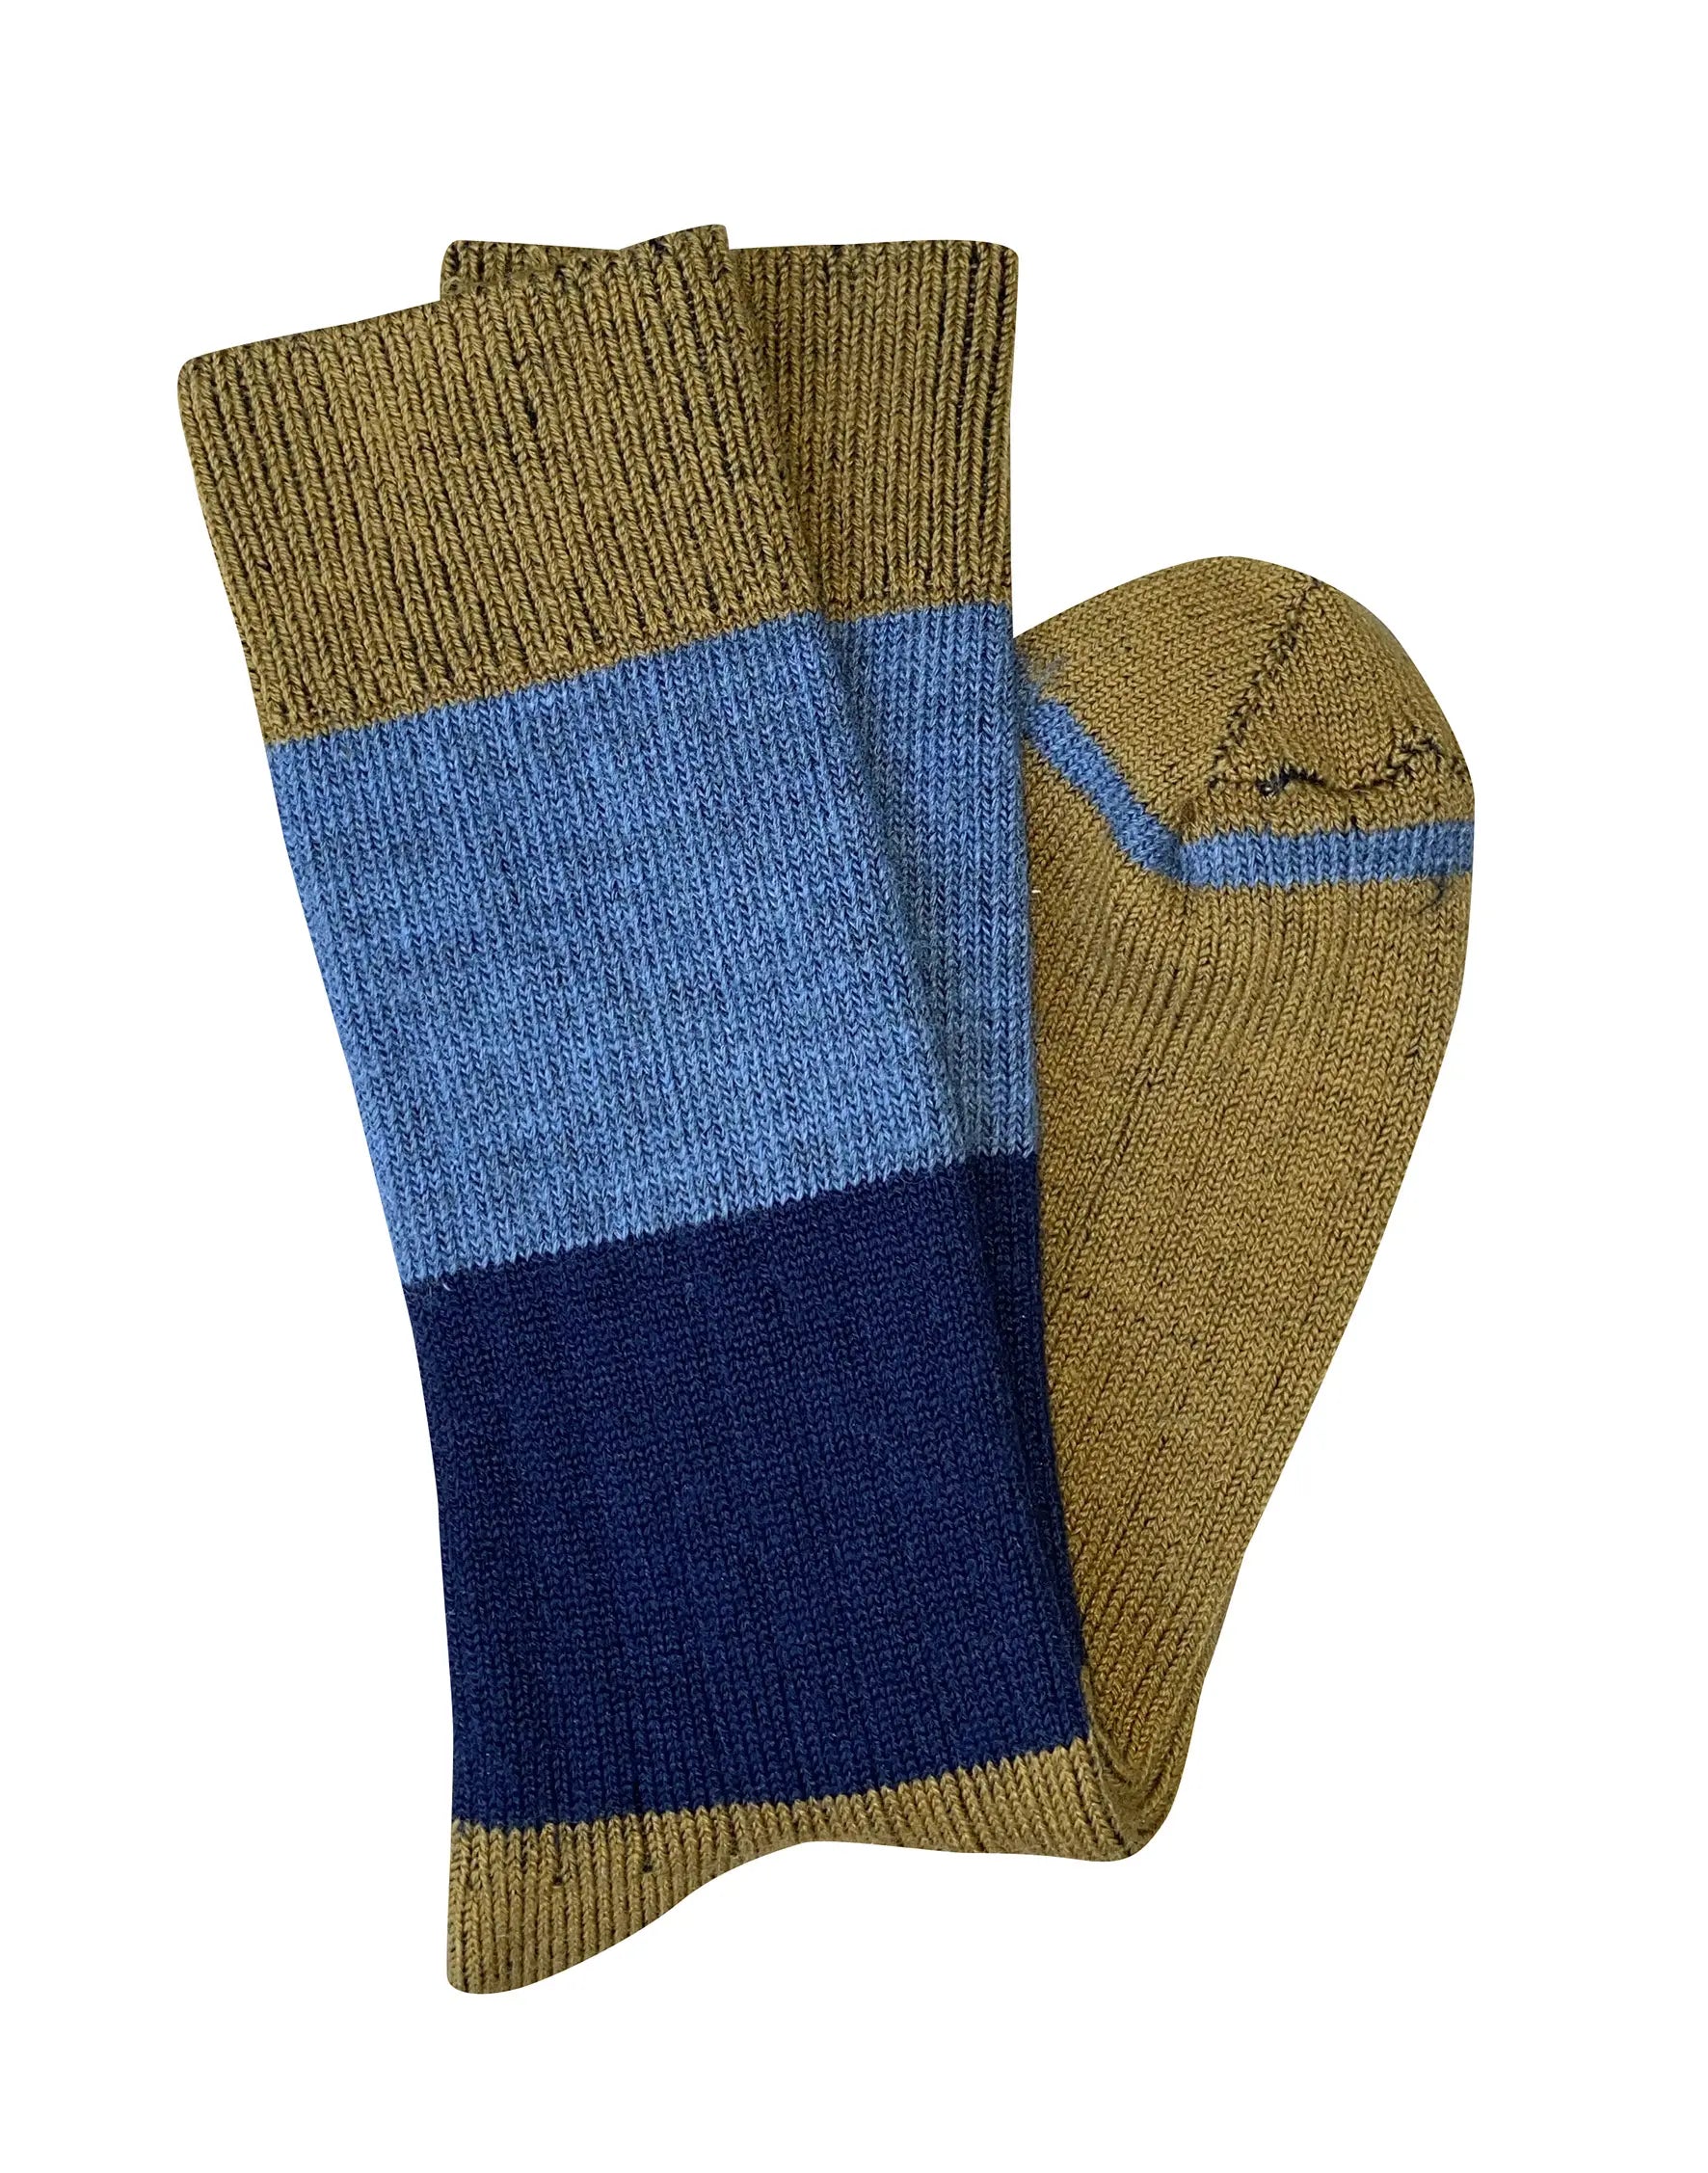 'Chunky Rib' Merino Socks - Tightology socks Tightology Mustard 